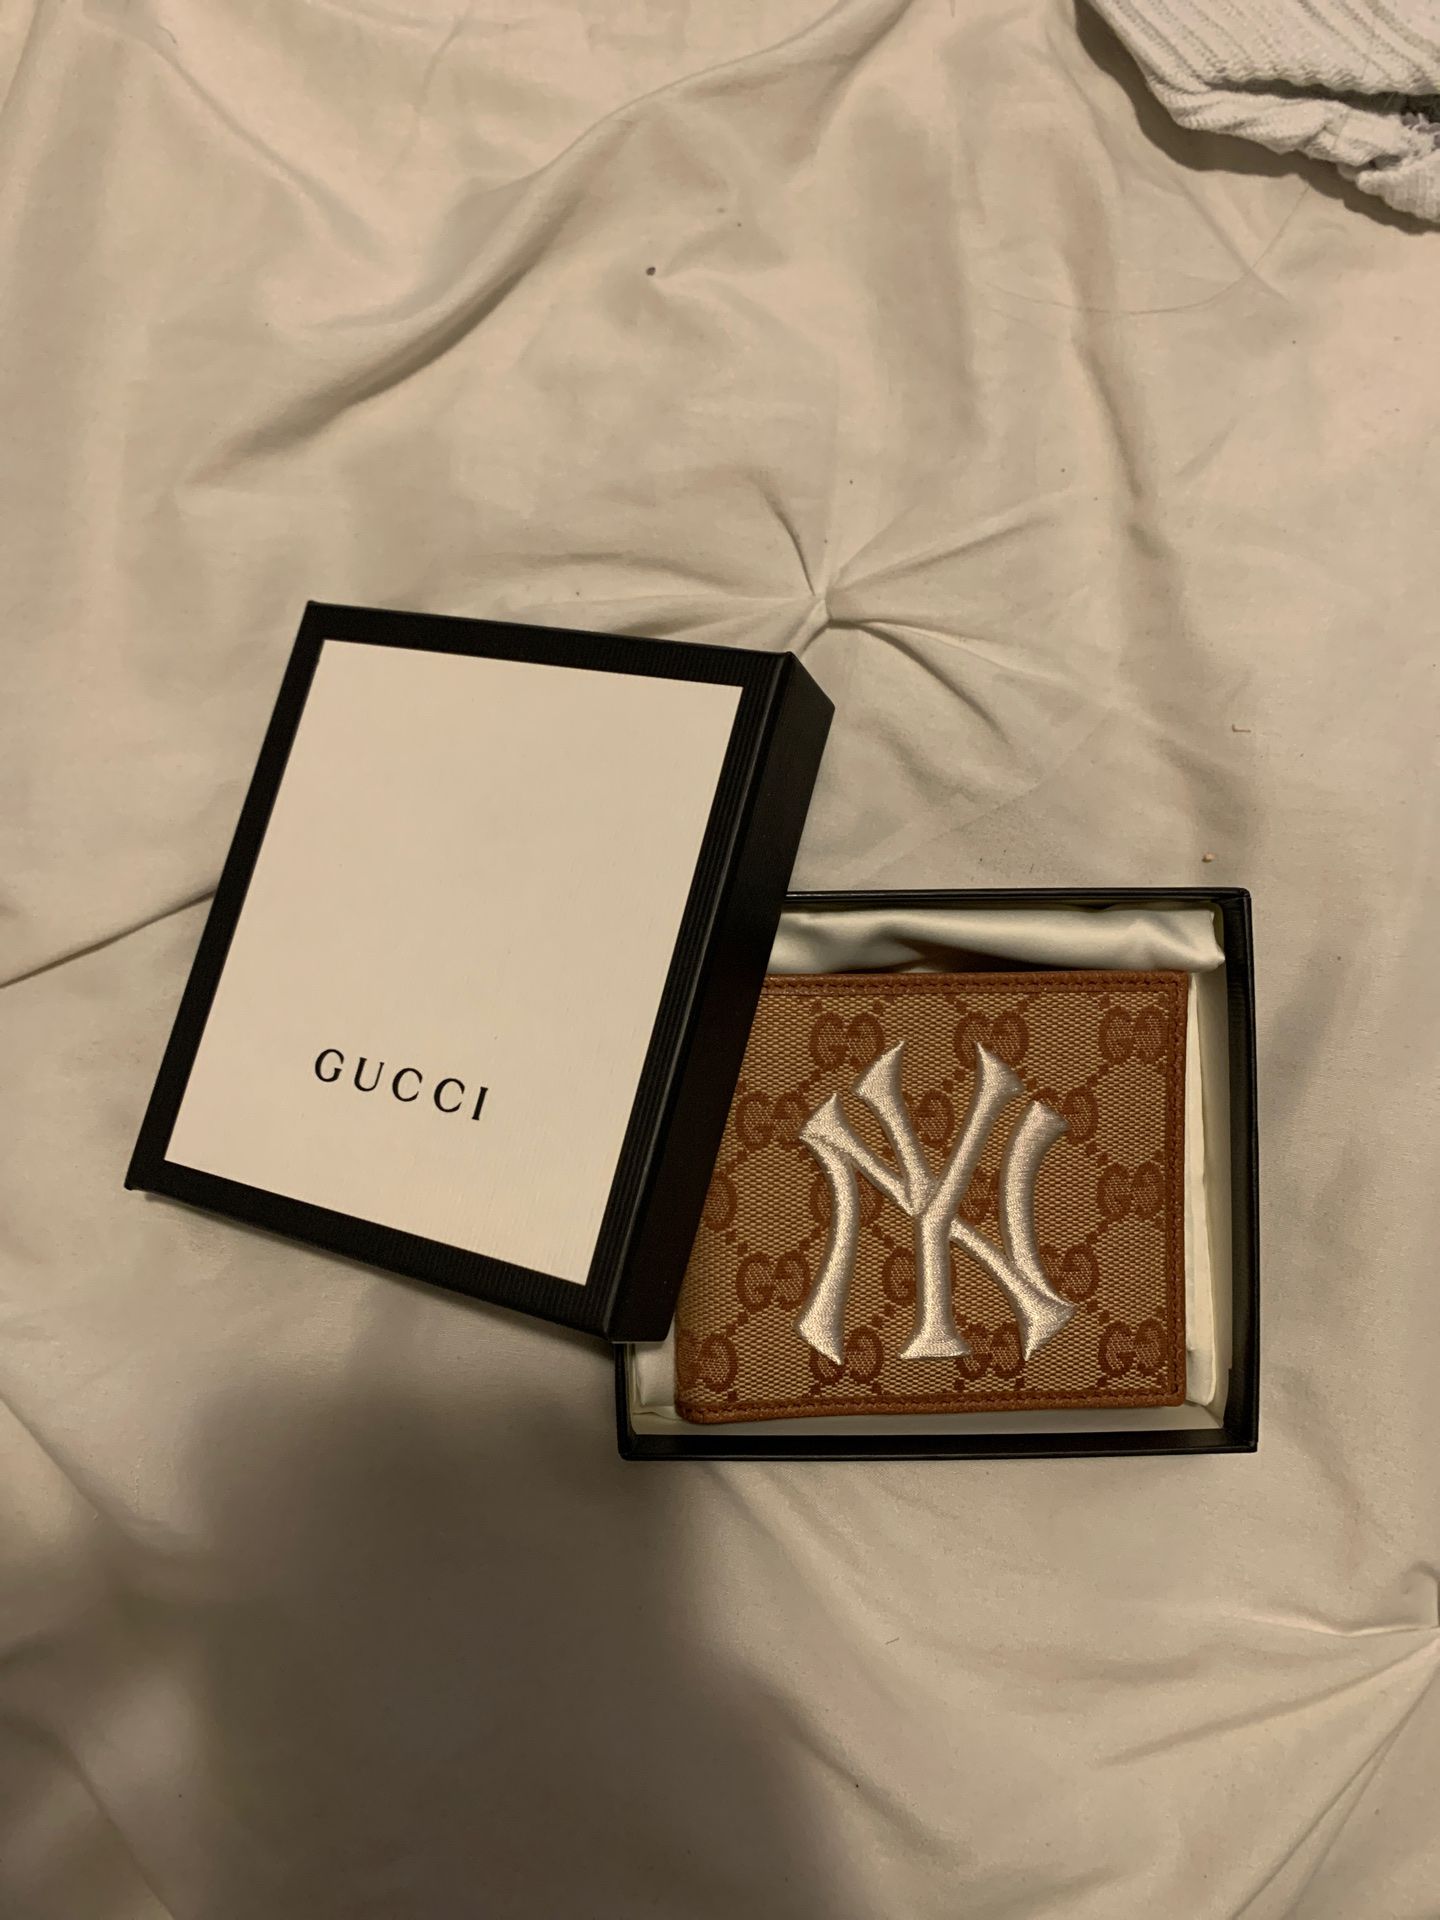 Gucci wallet New York Yankees